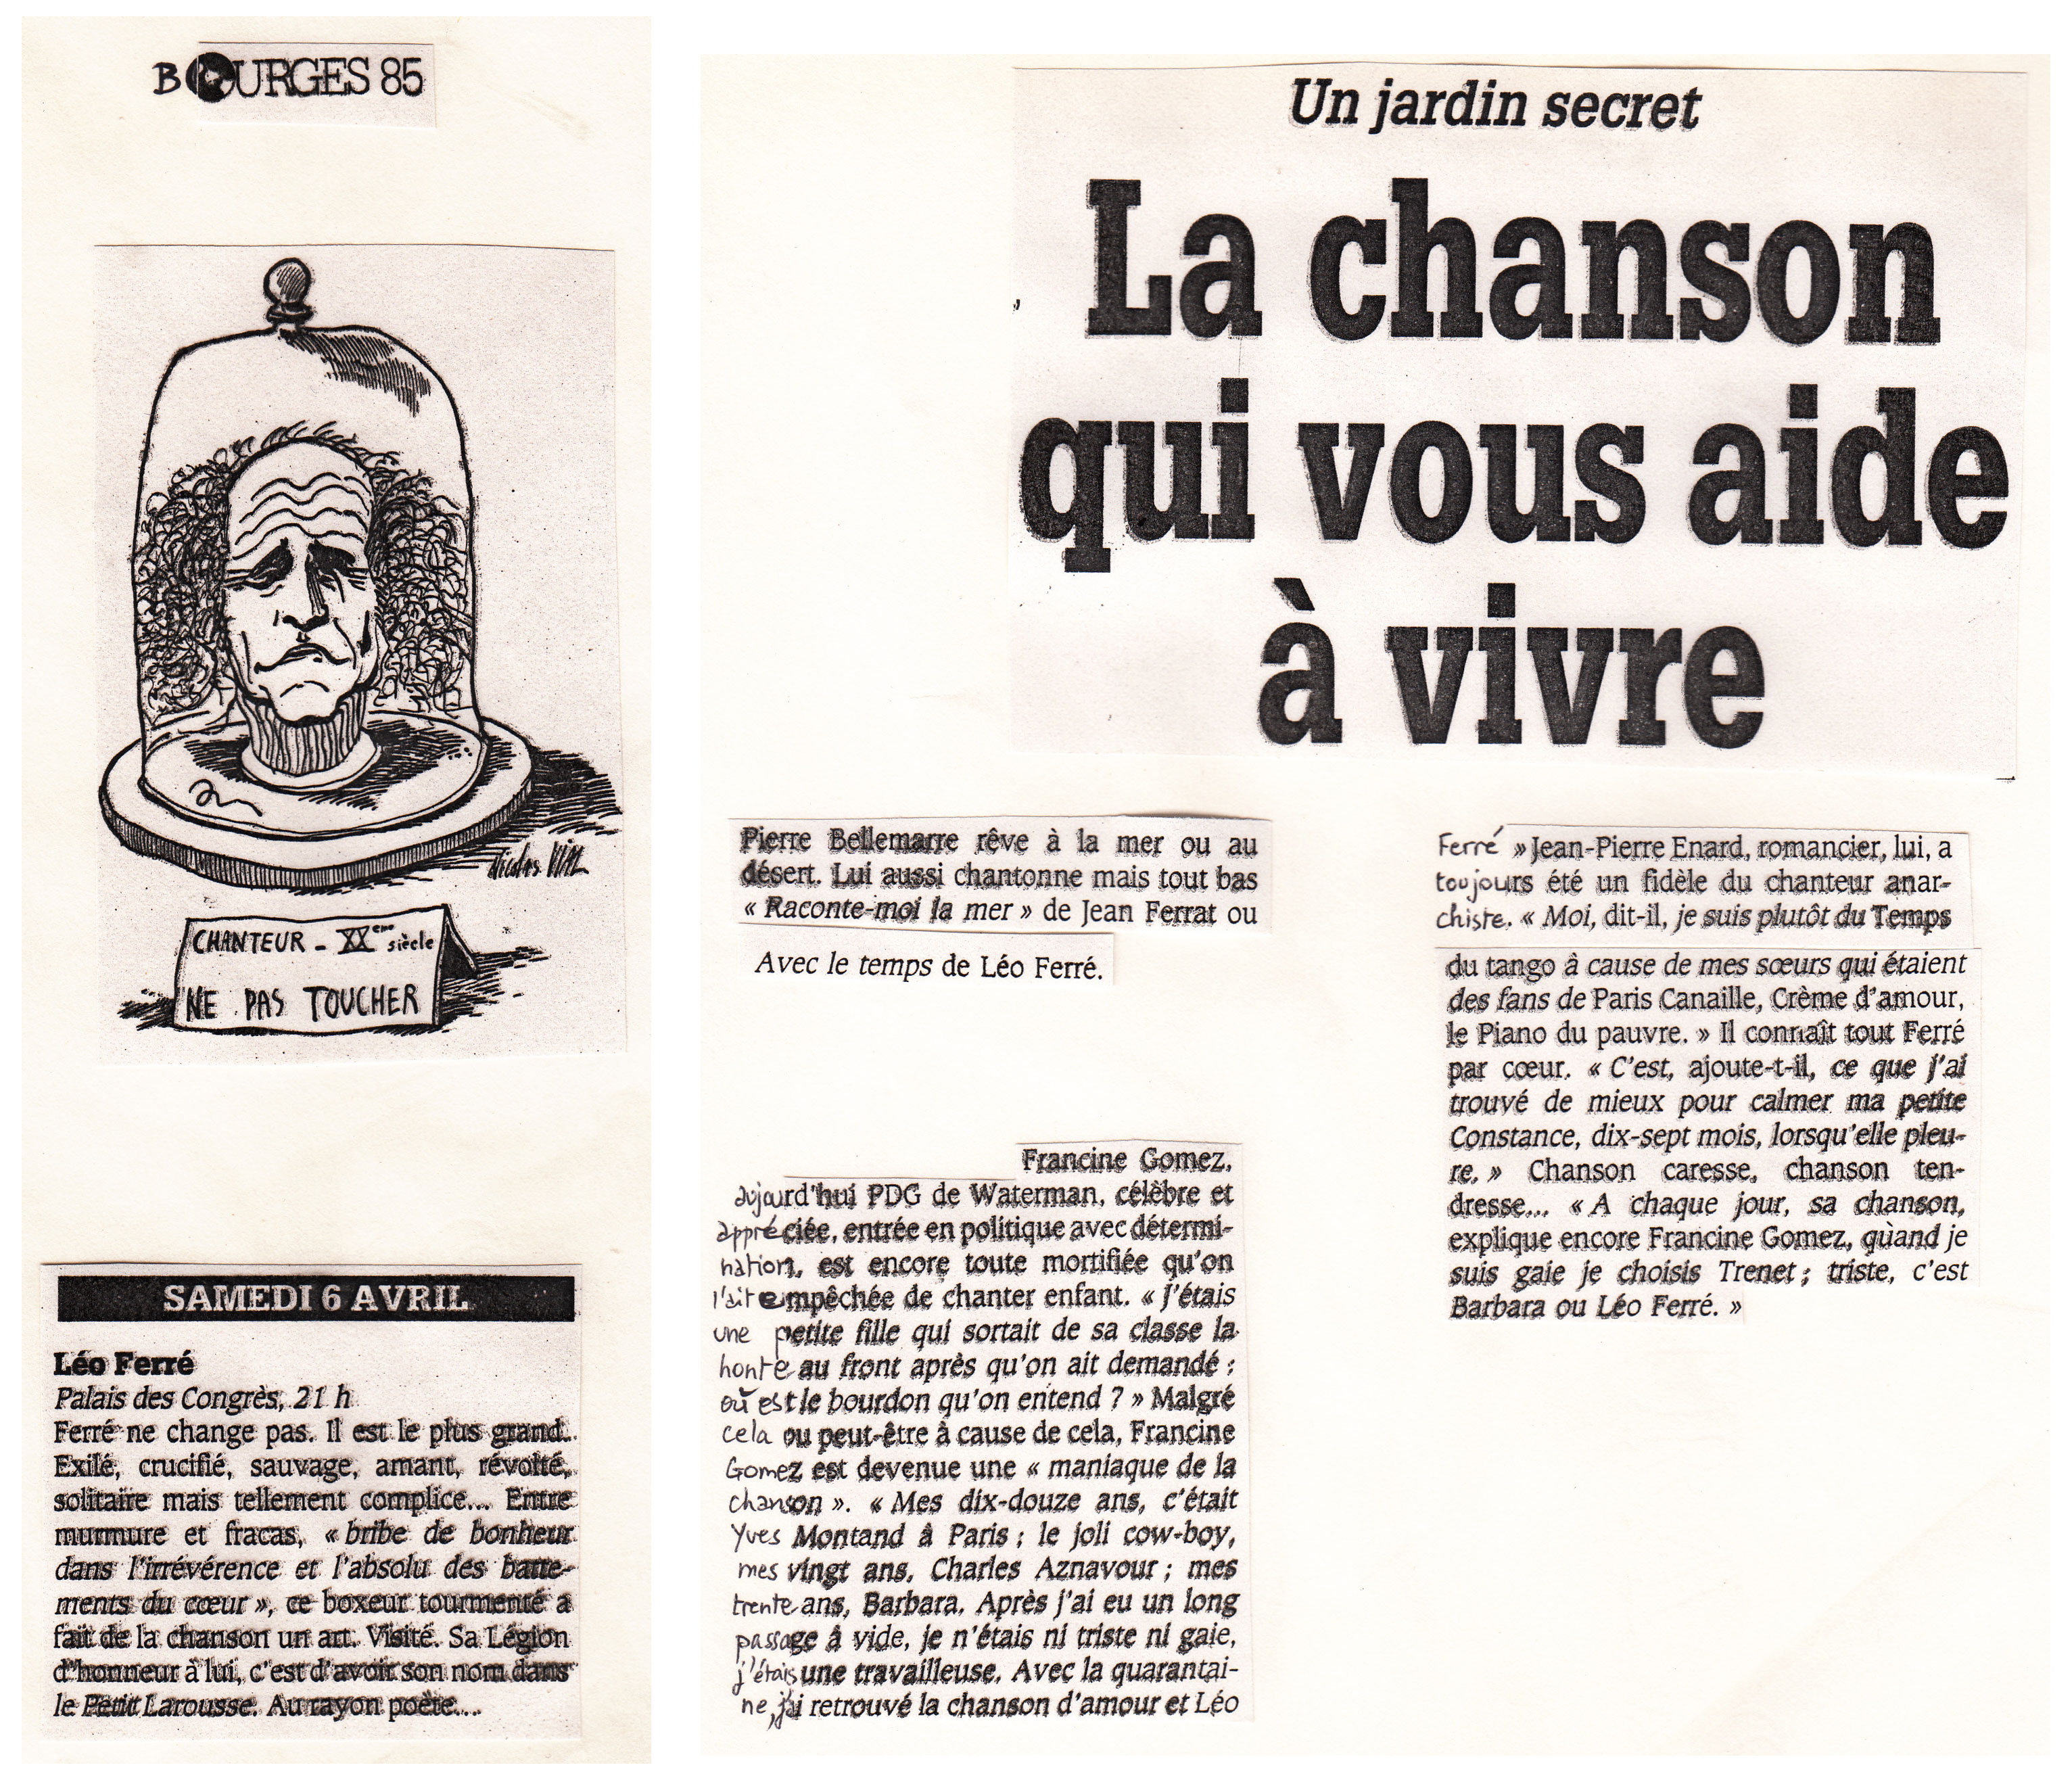 Léo Ferré - L'Évenementdujeudi du 28 mars au 3 avril 1985